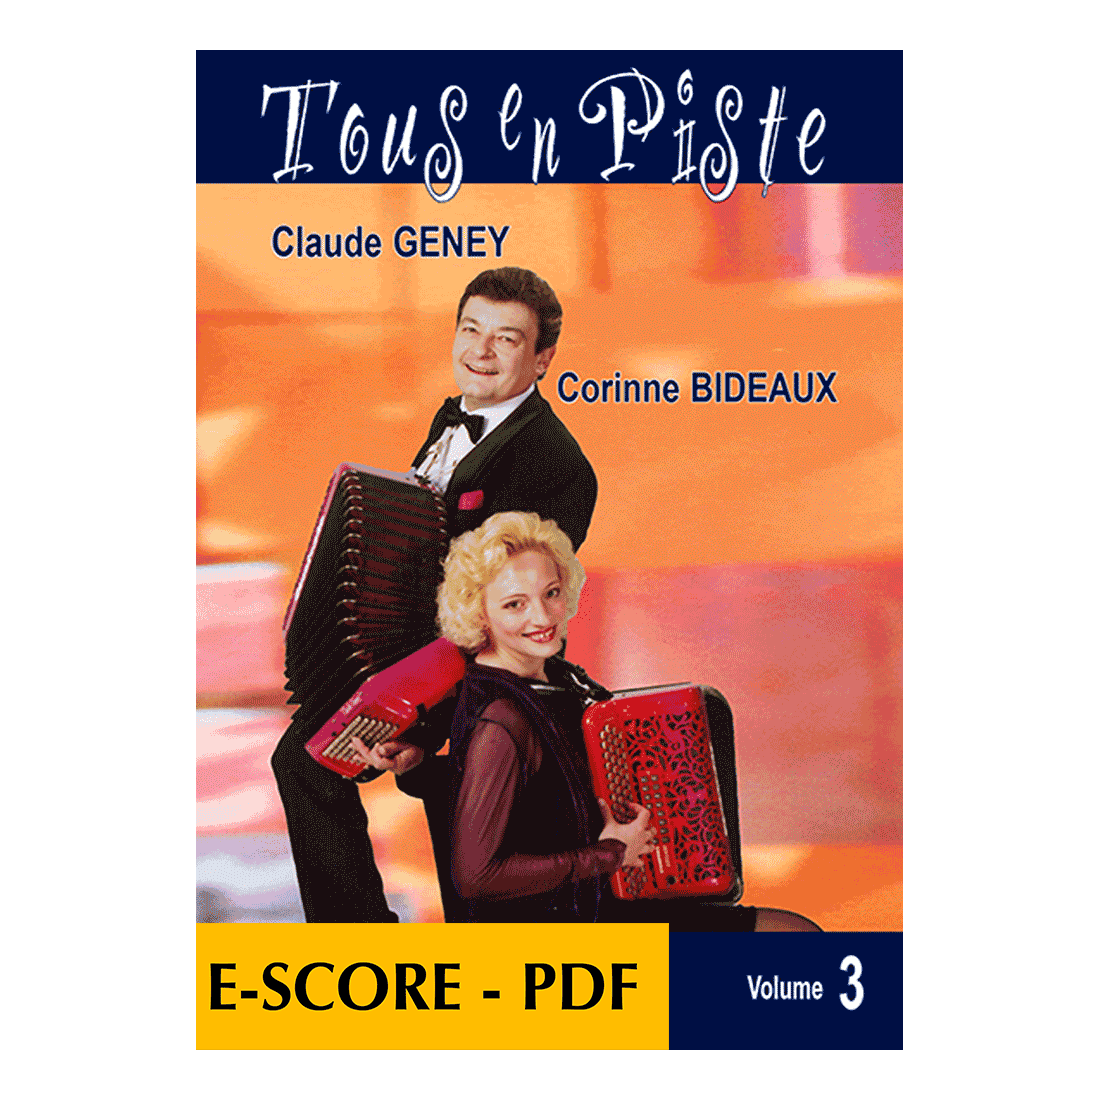 Tous en piste ! - Band 3 für 1 oder 2 Akkordeon - E-score PDF